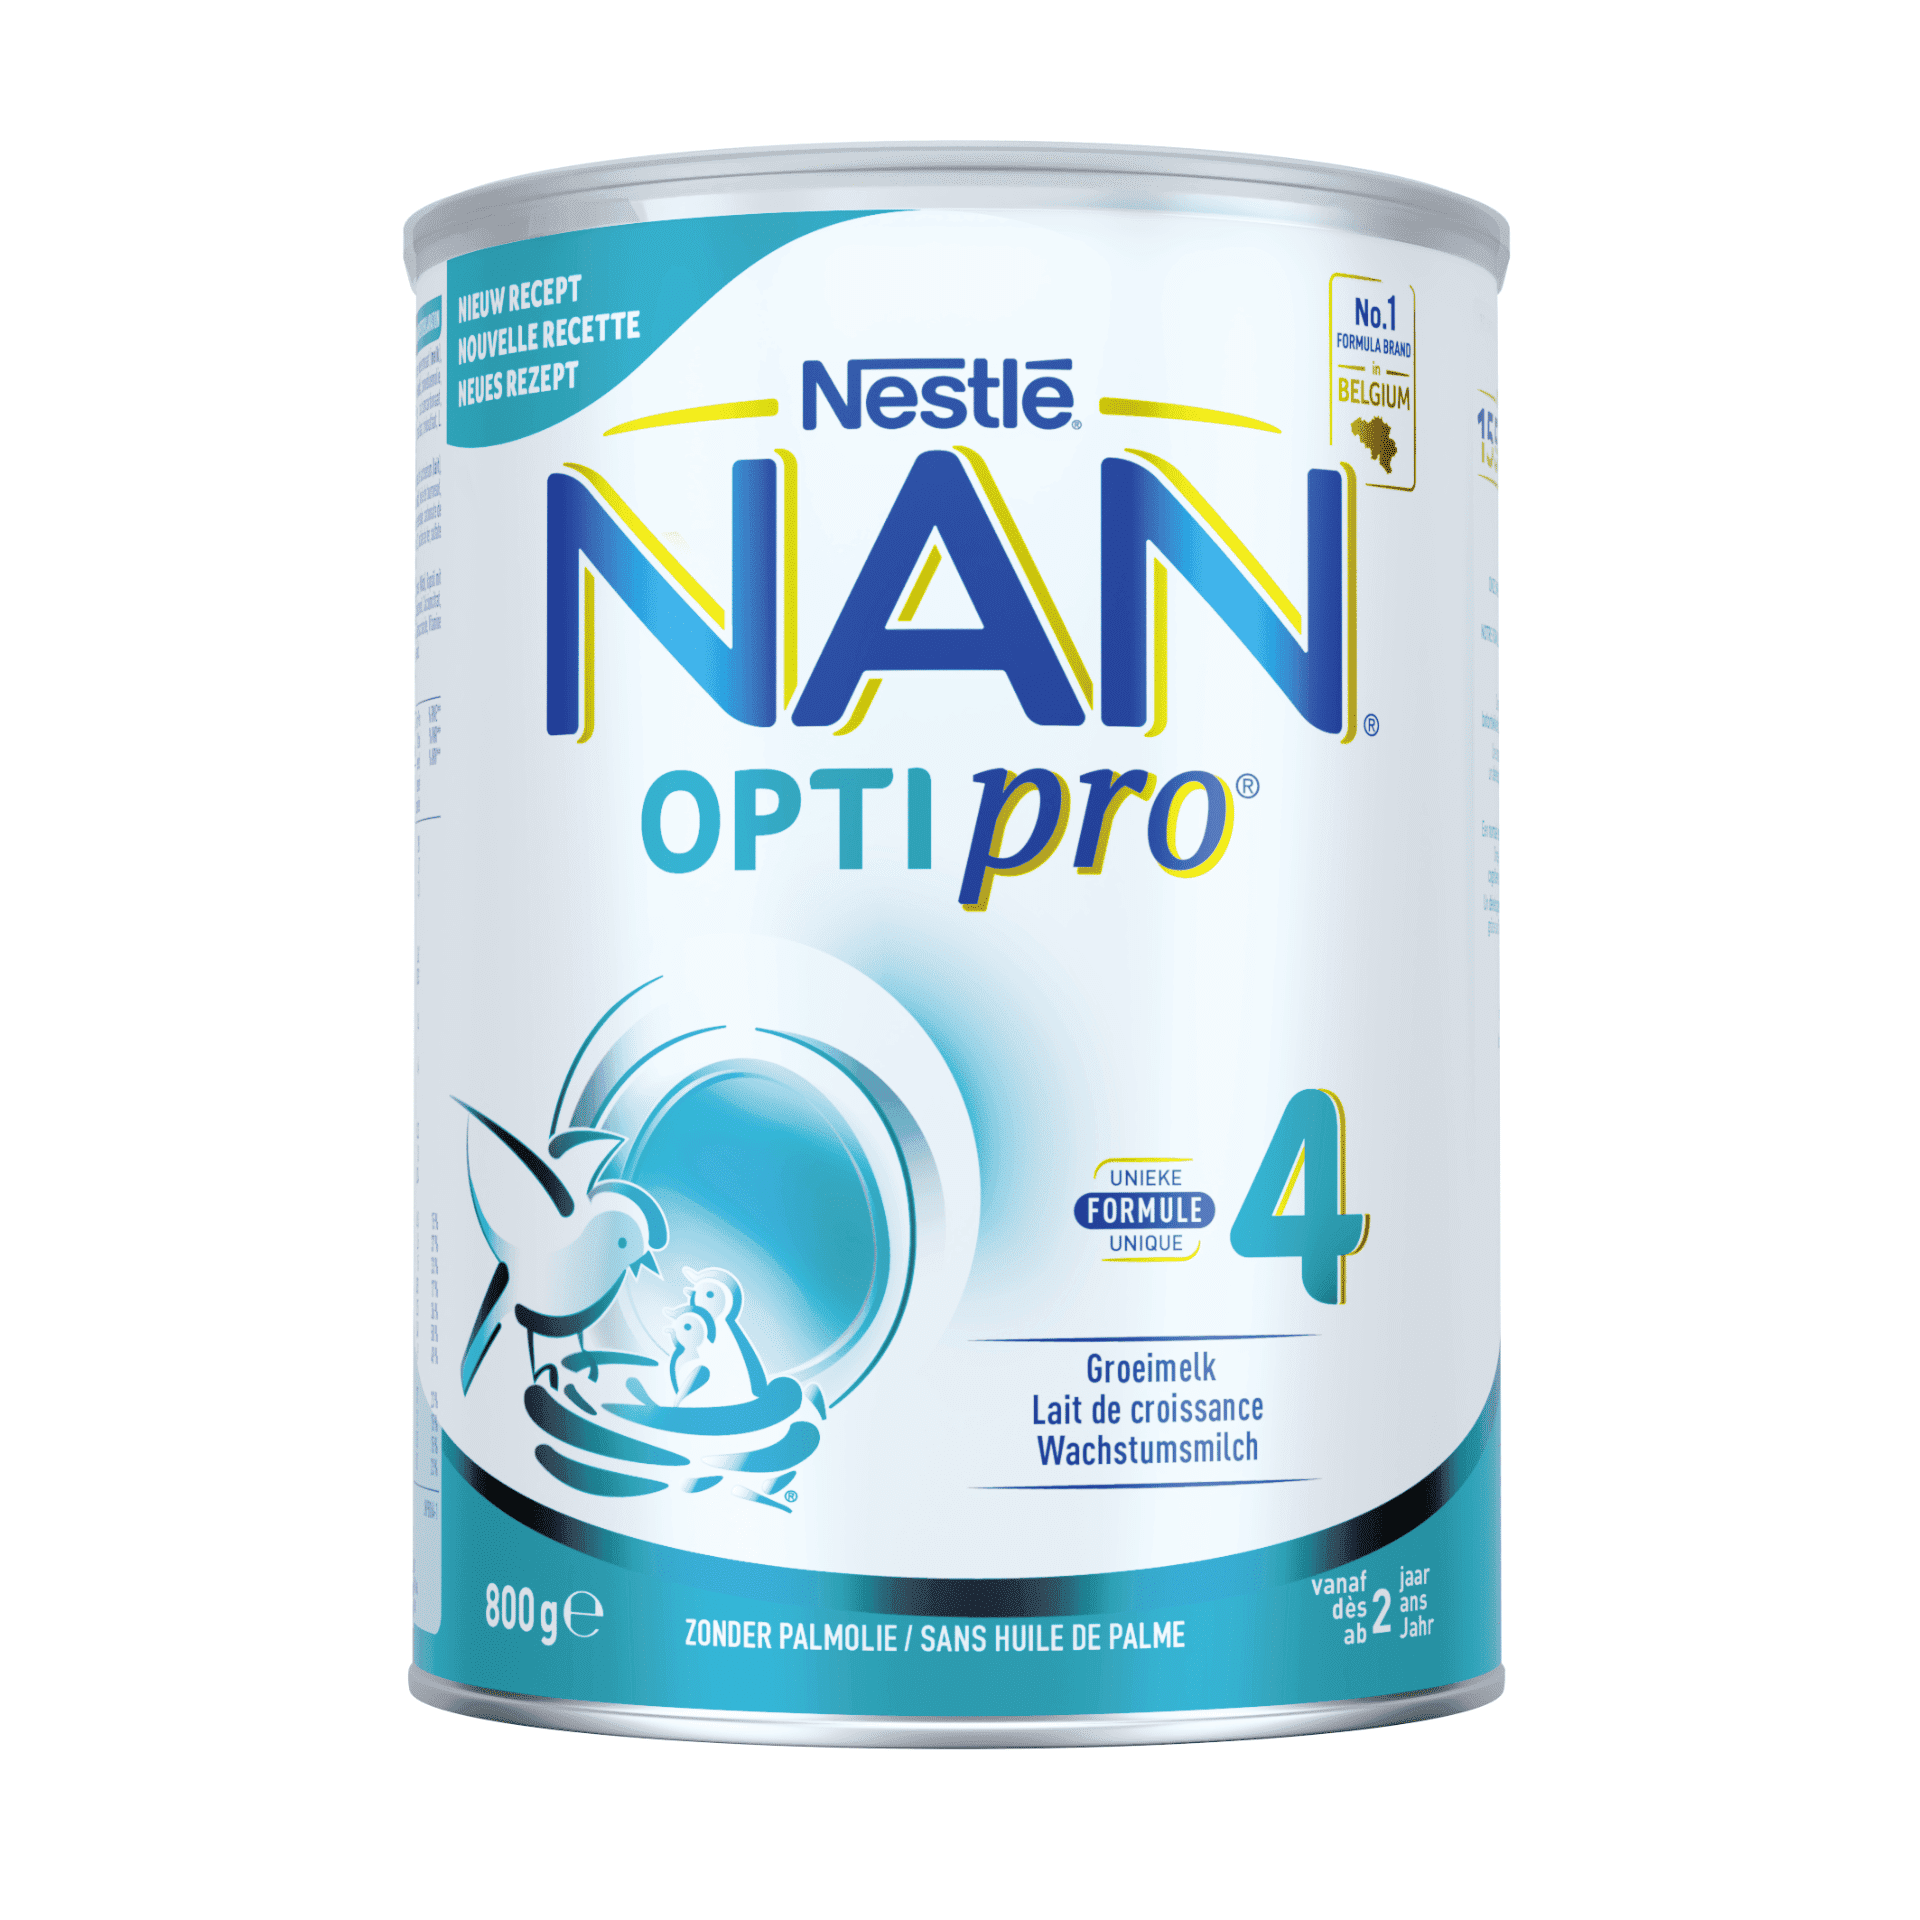 Nan Optipro 4